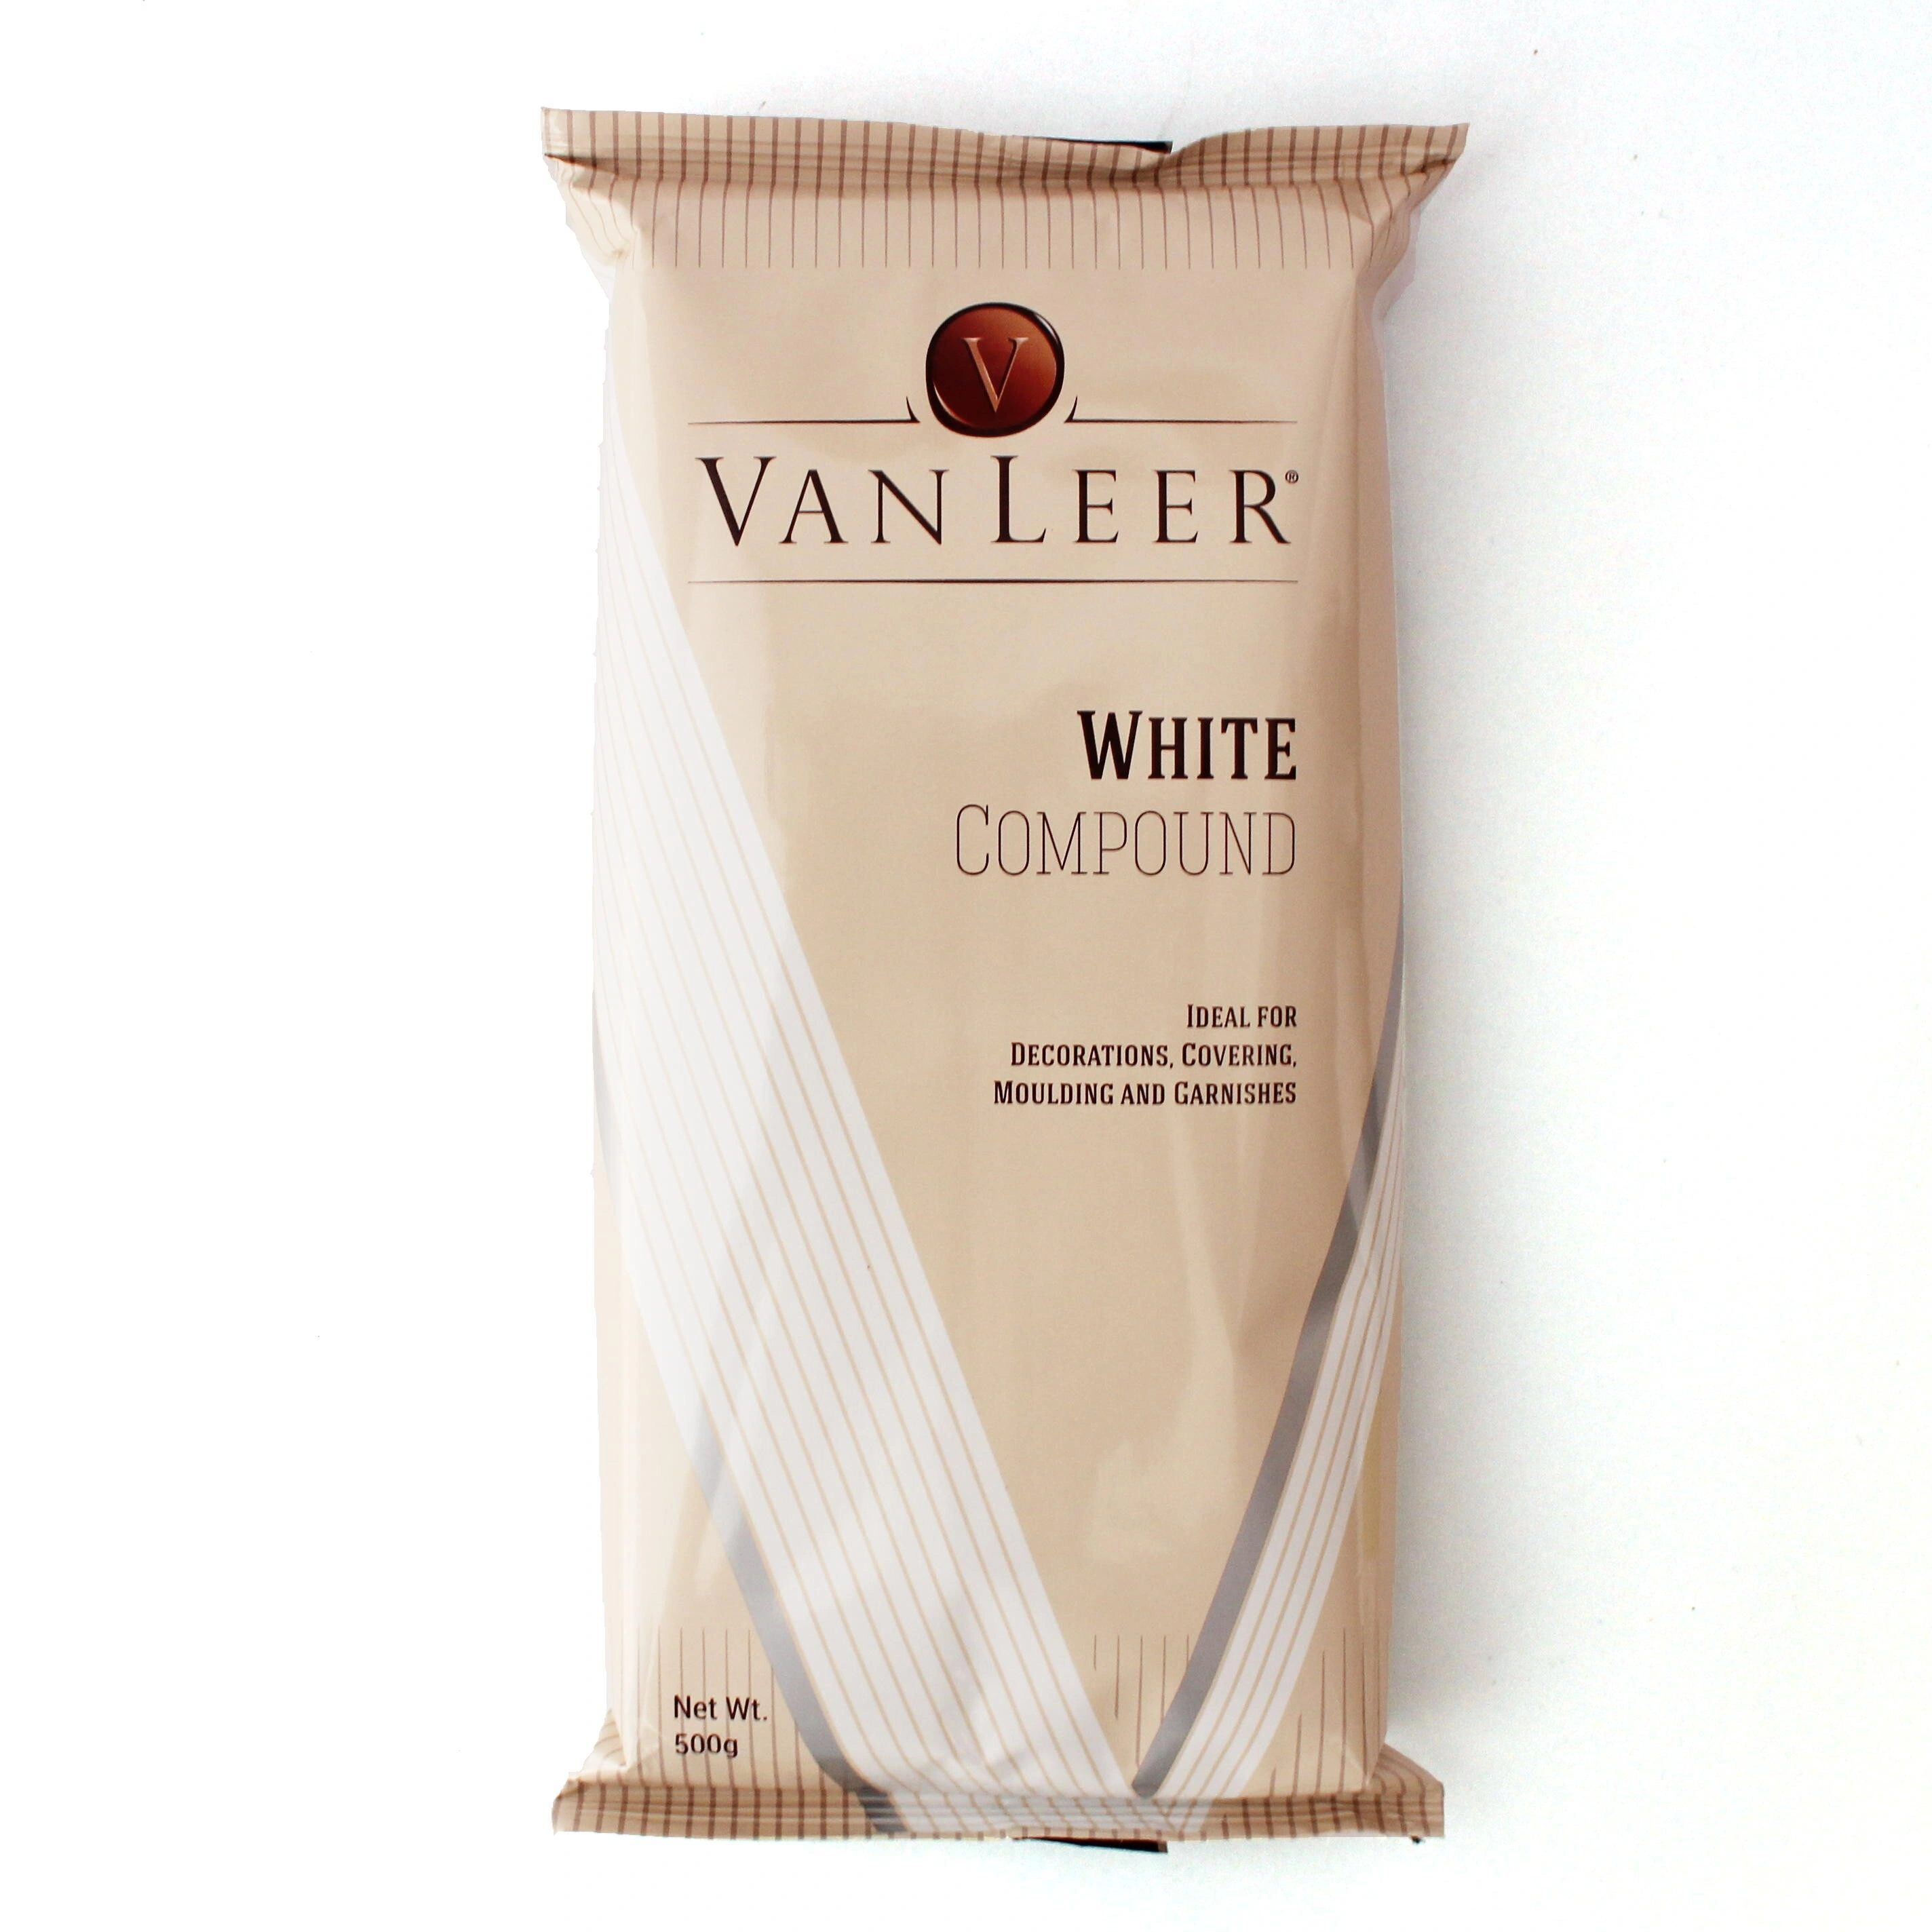 VAN LEER - WHITE COMPOUND CONFECTION 500GMS-B05IC17V10WHI001